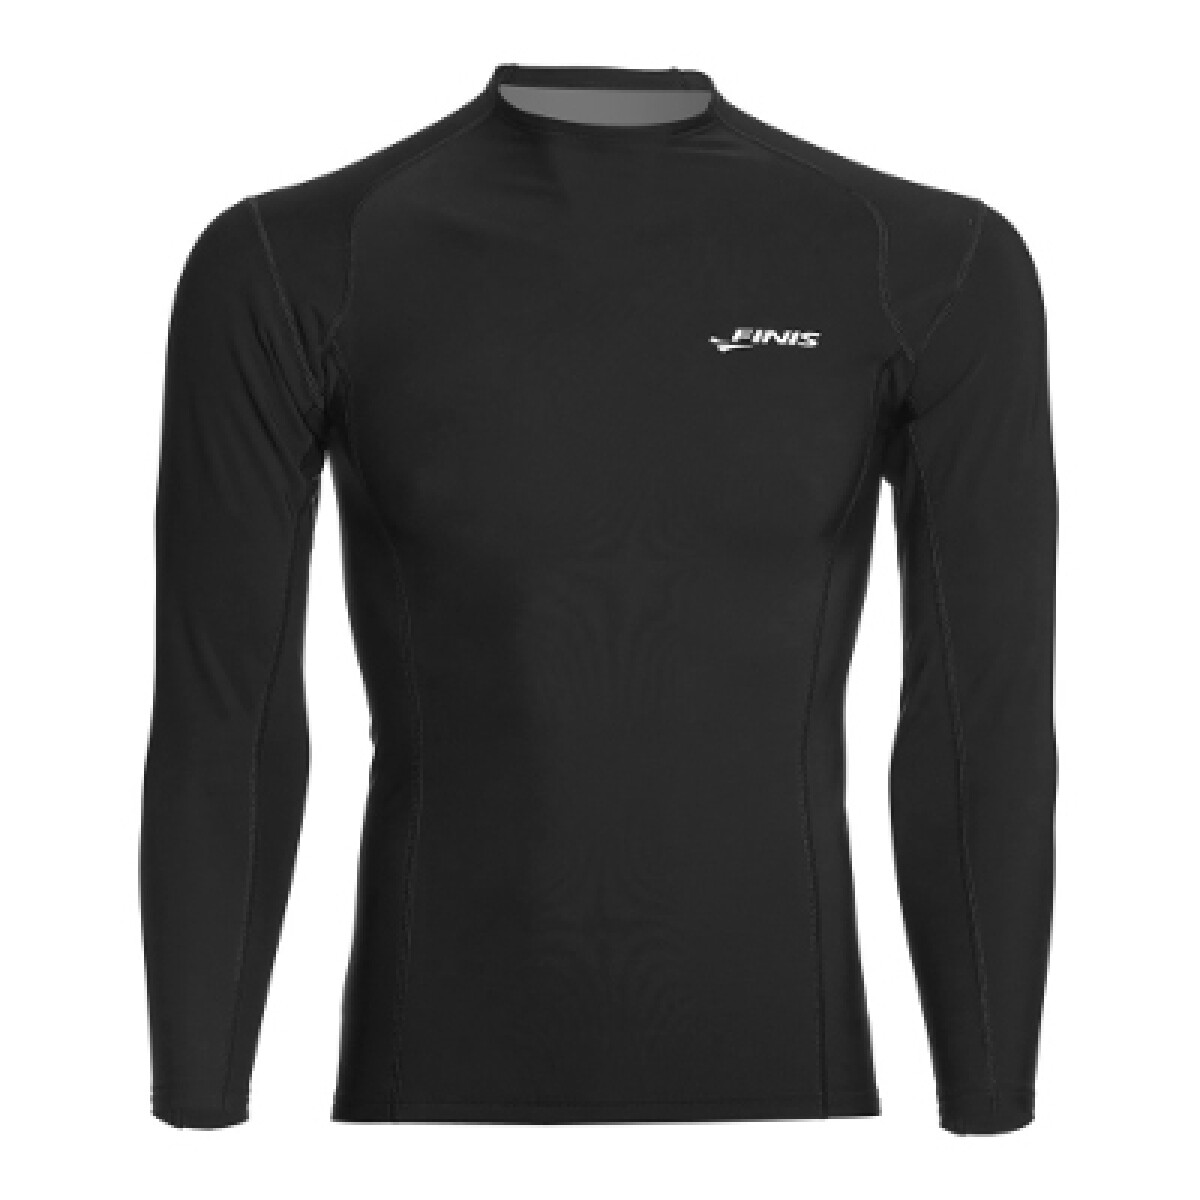 Finis - Camiseta Térmica Unisex Thermal Training Shirt 1.05.048.06 - Protección Uva, Uvb, Antibacter - 001 